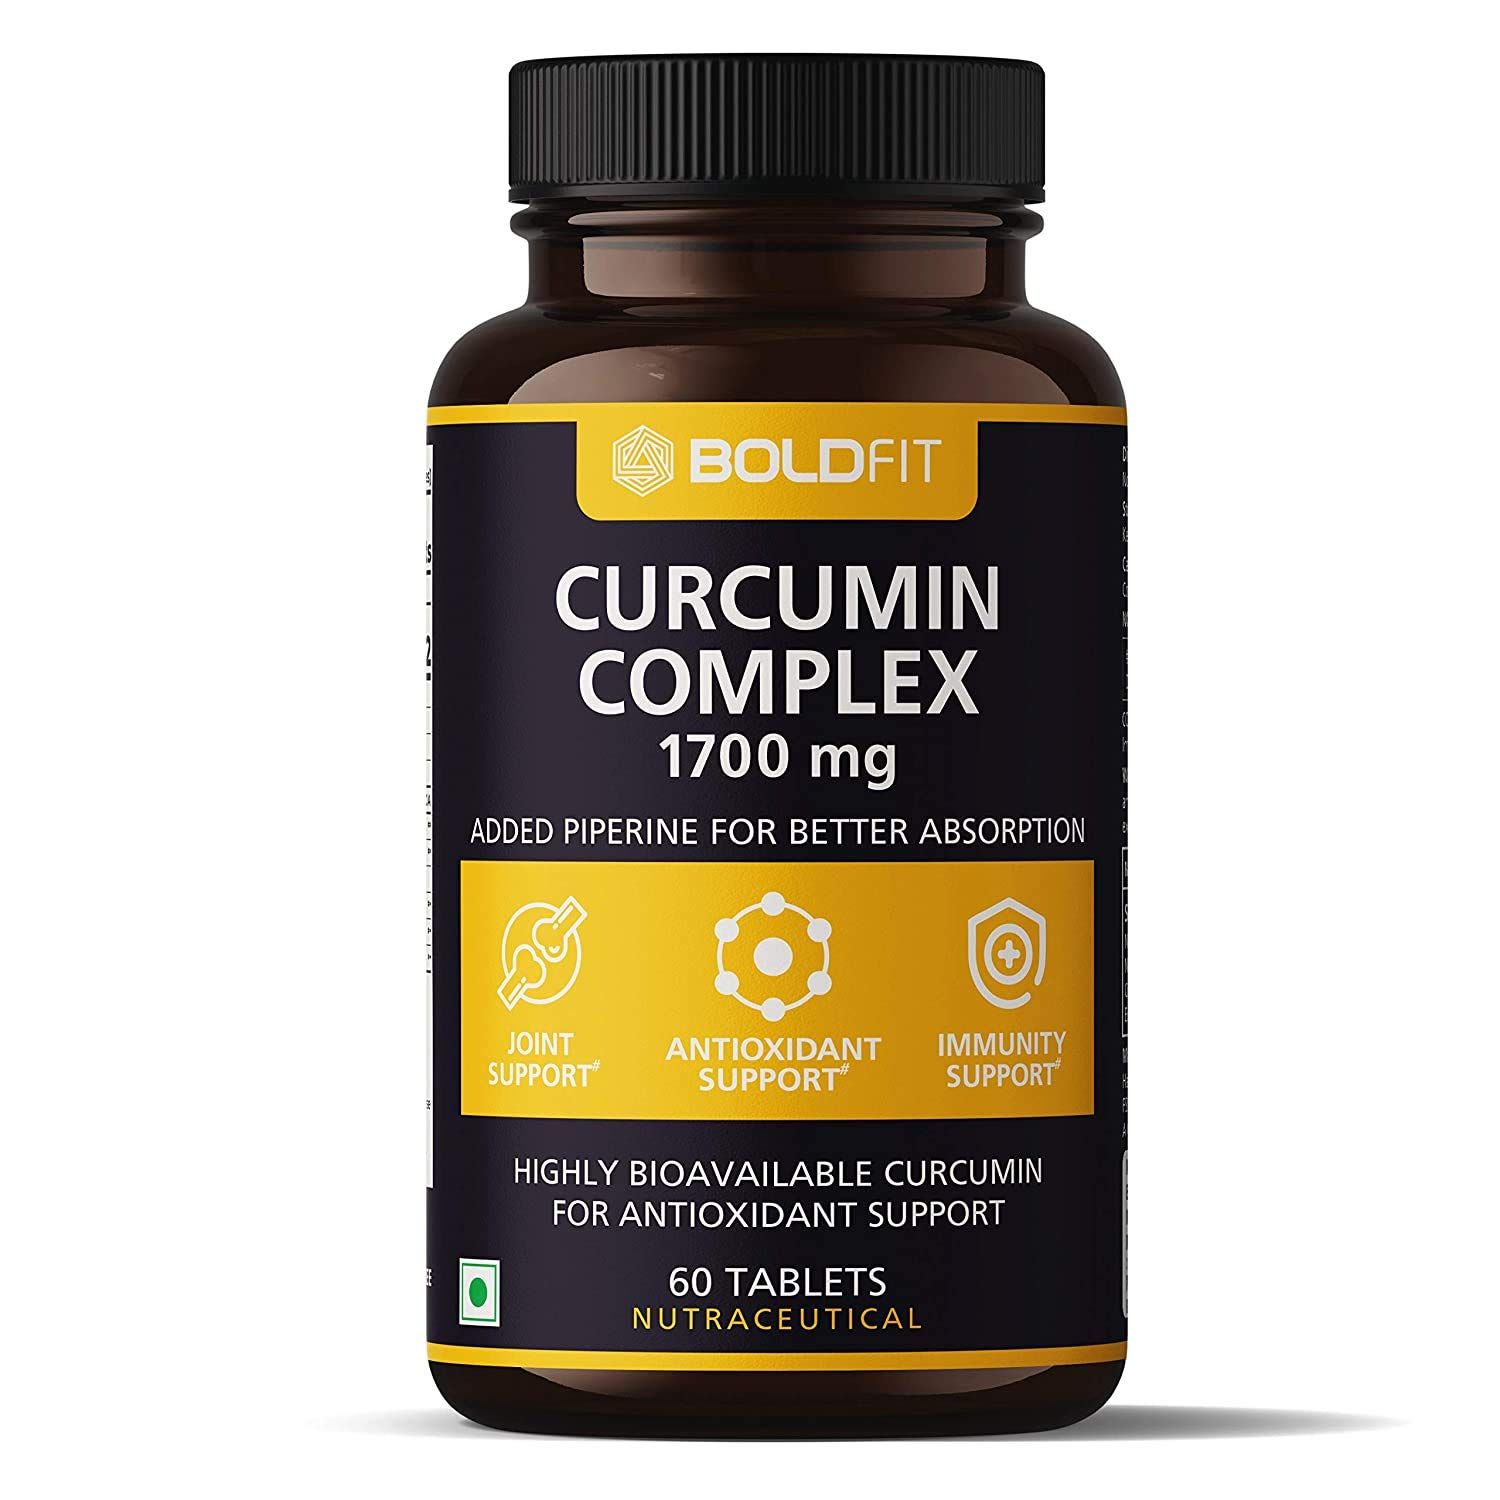 Boldfit Curcumin Complex Supplements Image